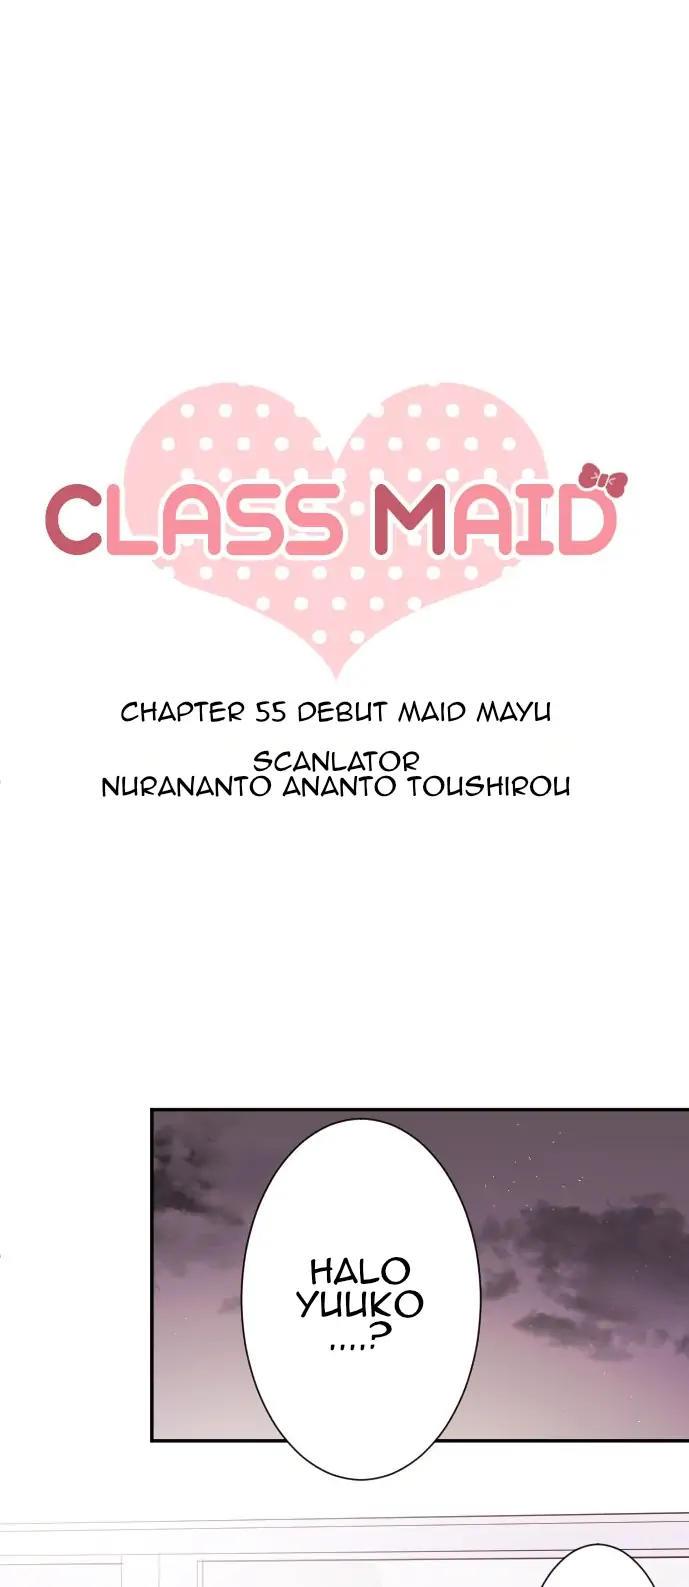 Class Maid (Shimamura) Chapter 55